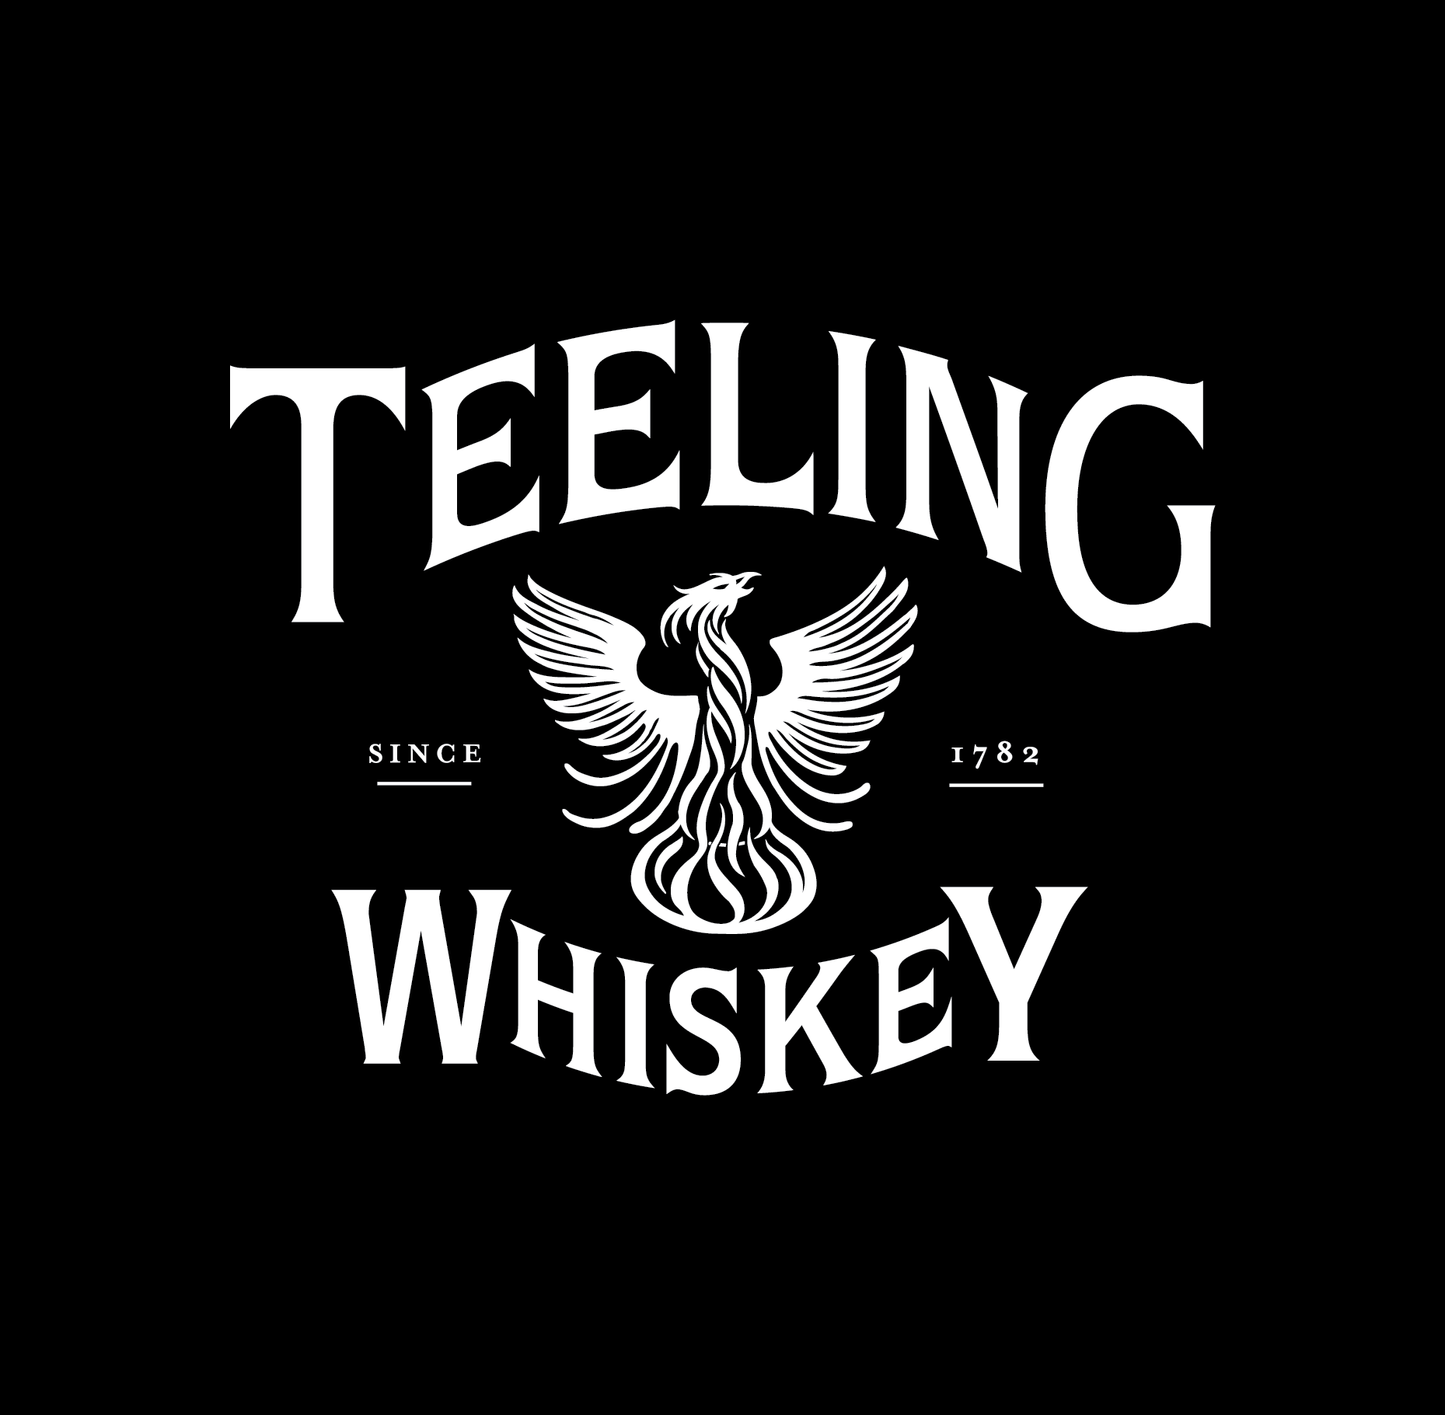 Teeling Whiskey - Primary Logo